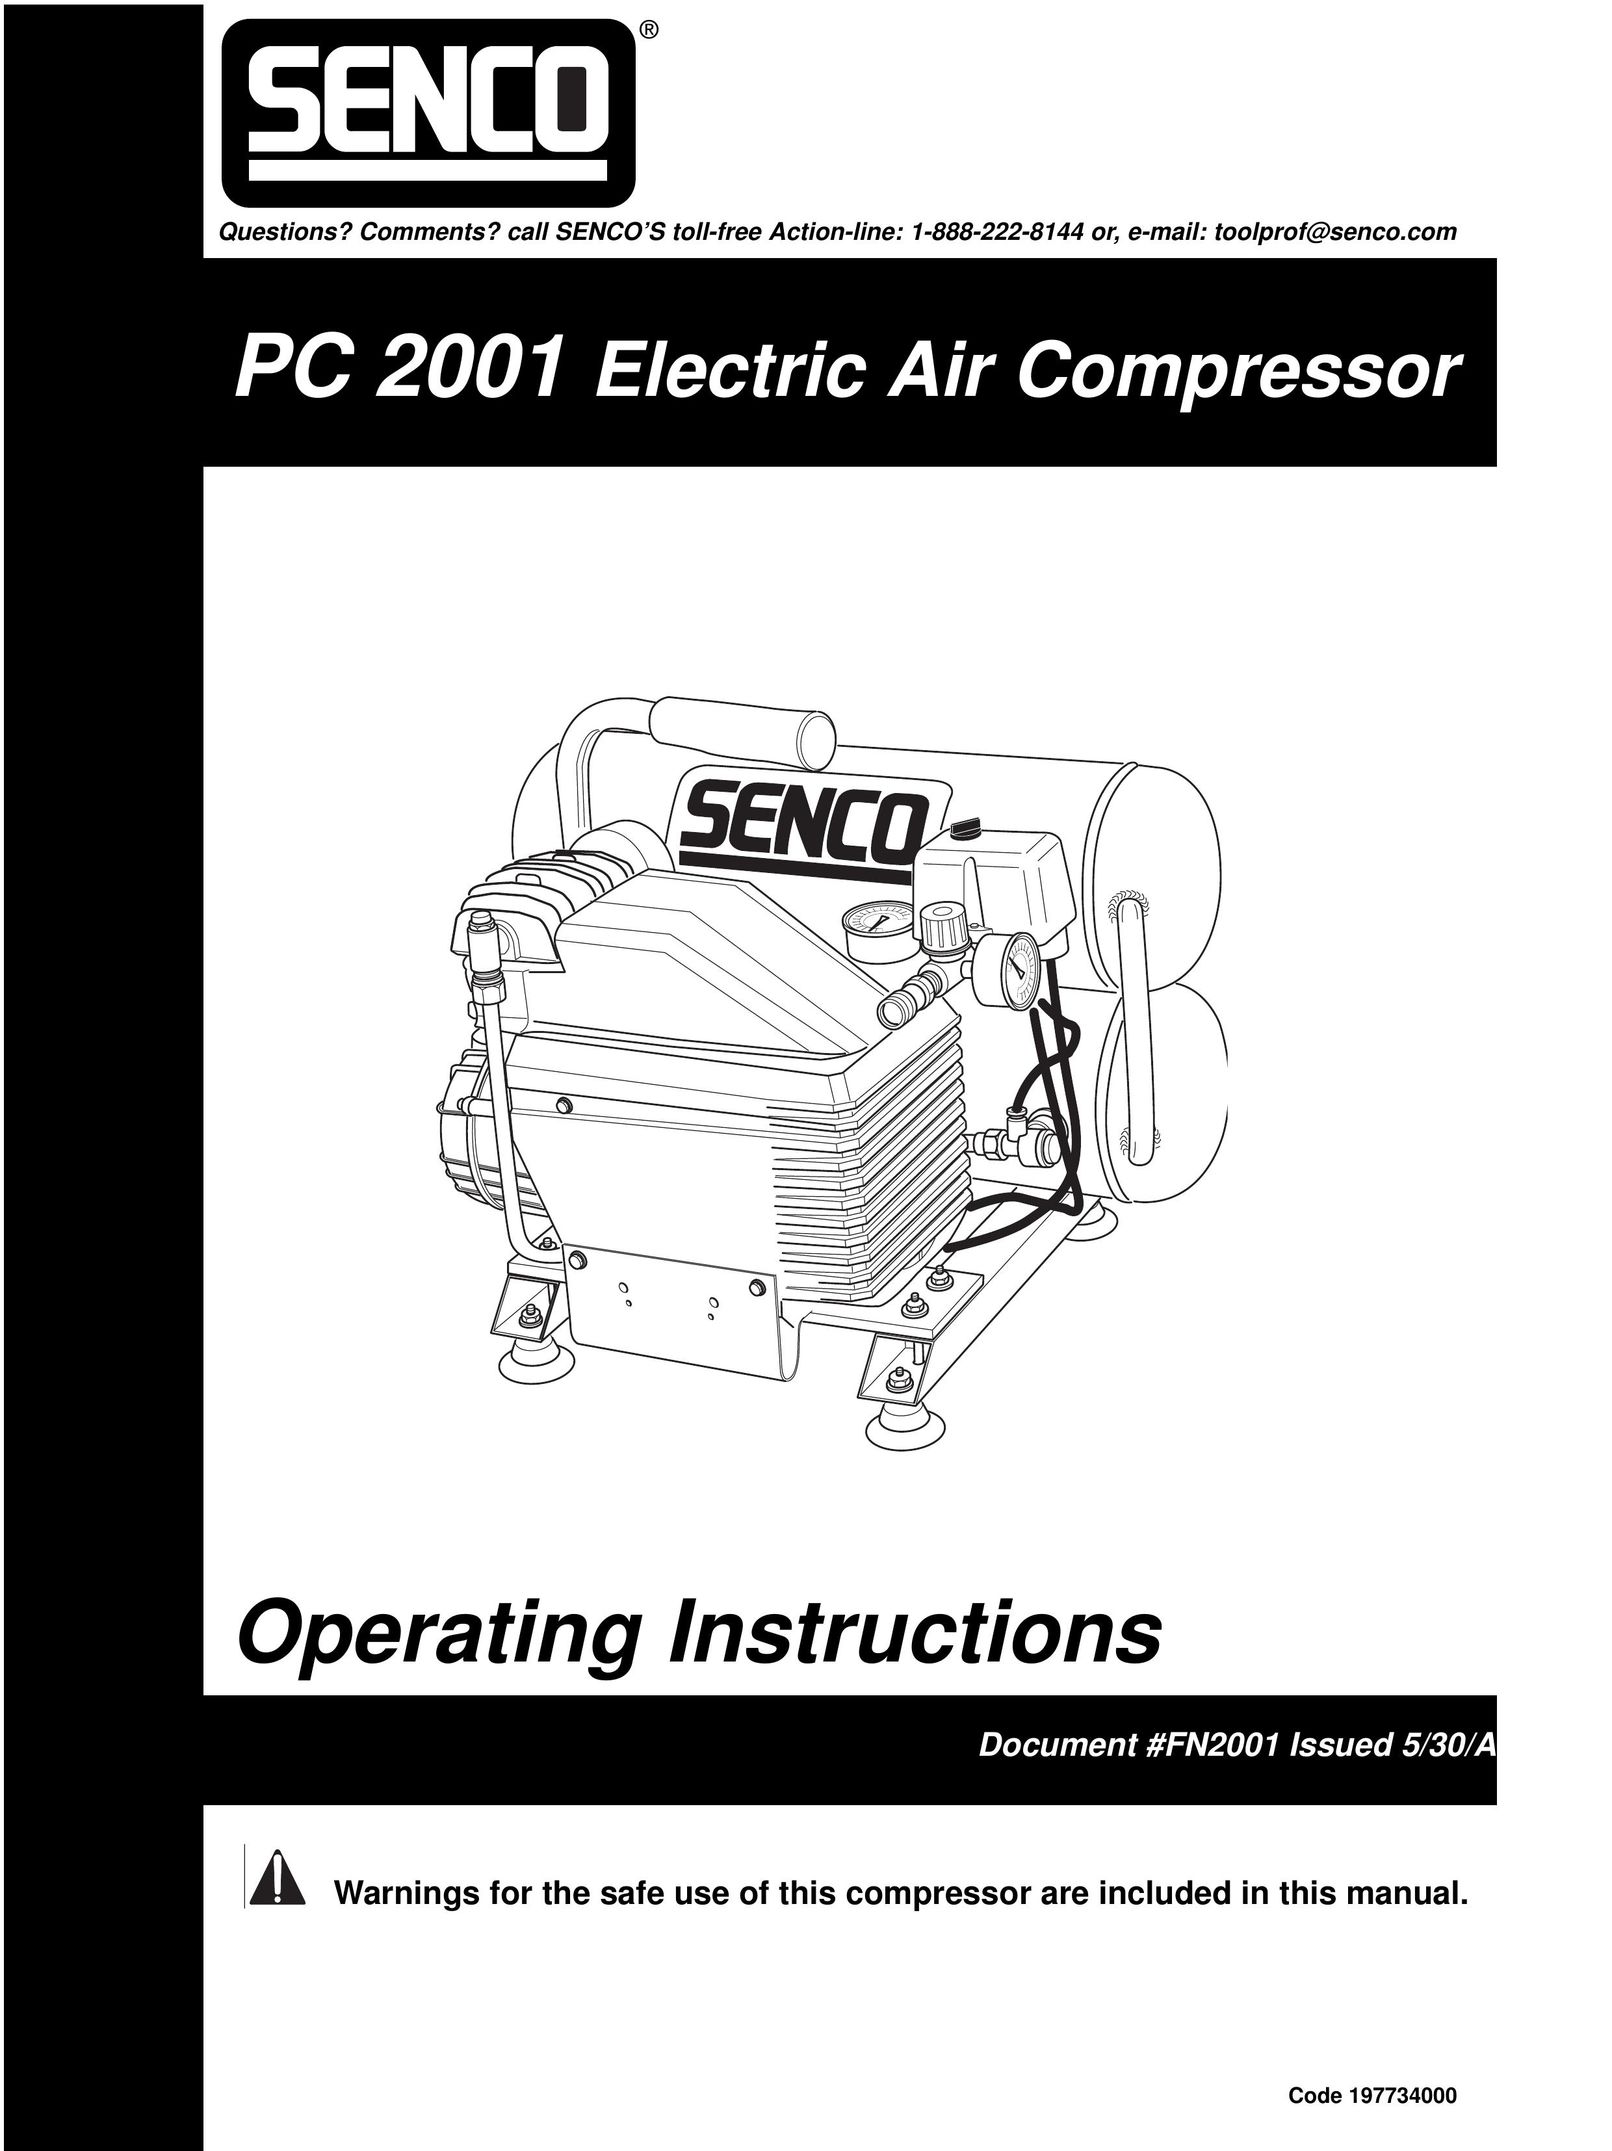 Senco PC 2001 Air Compressor User Manual